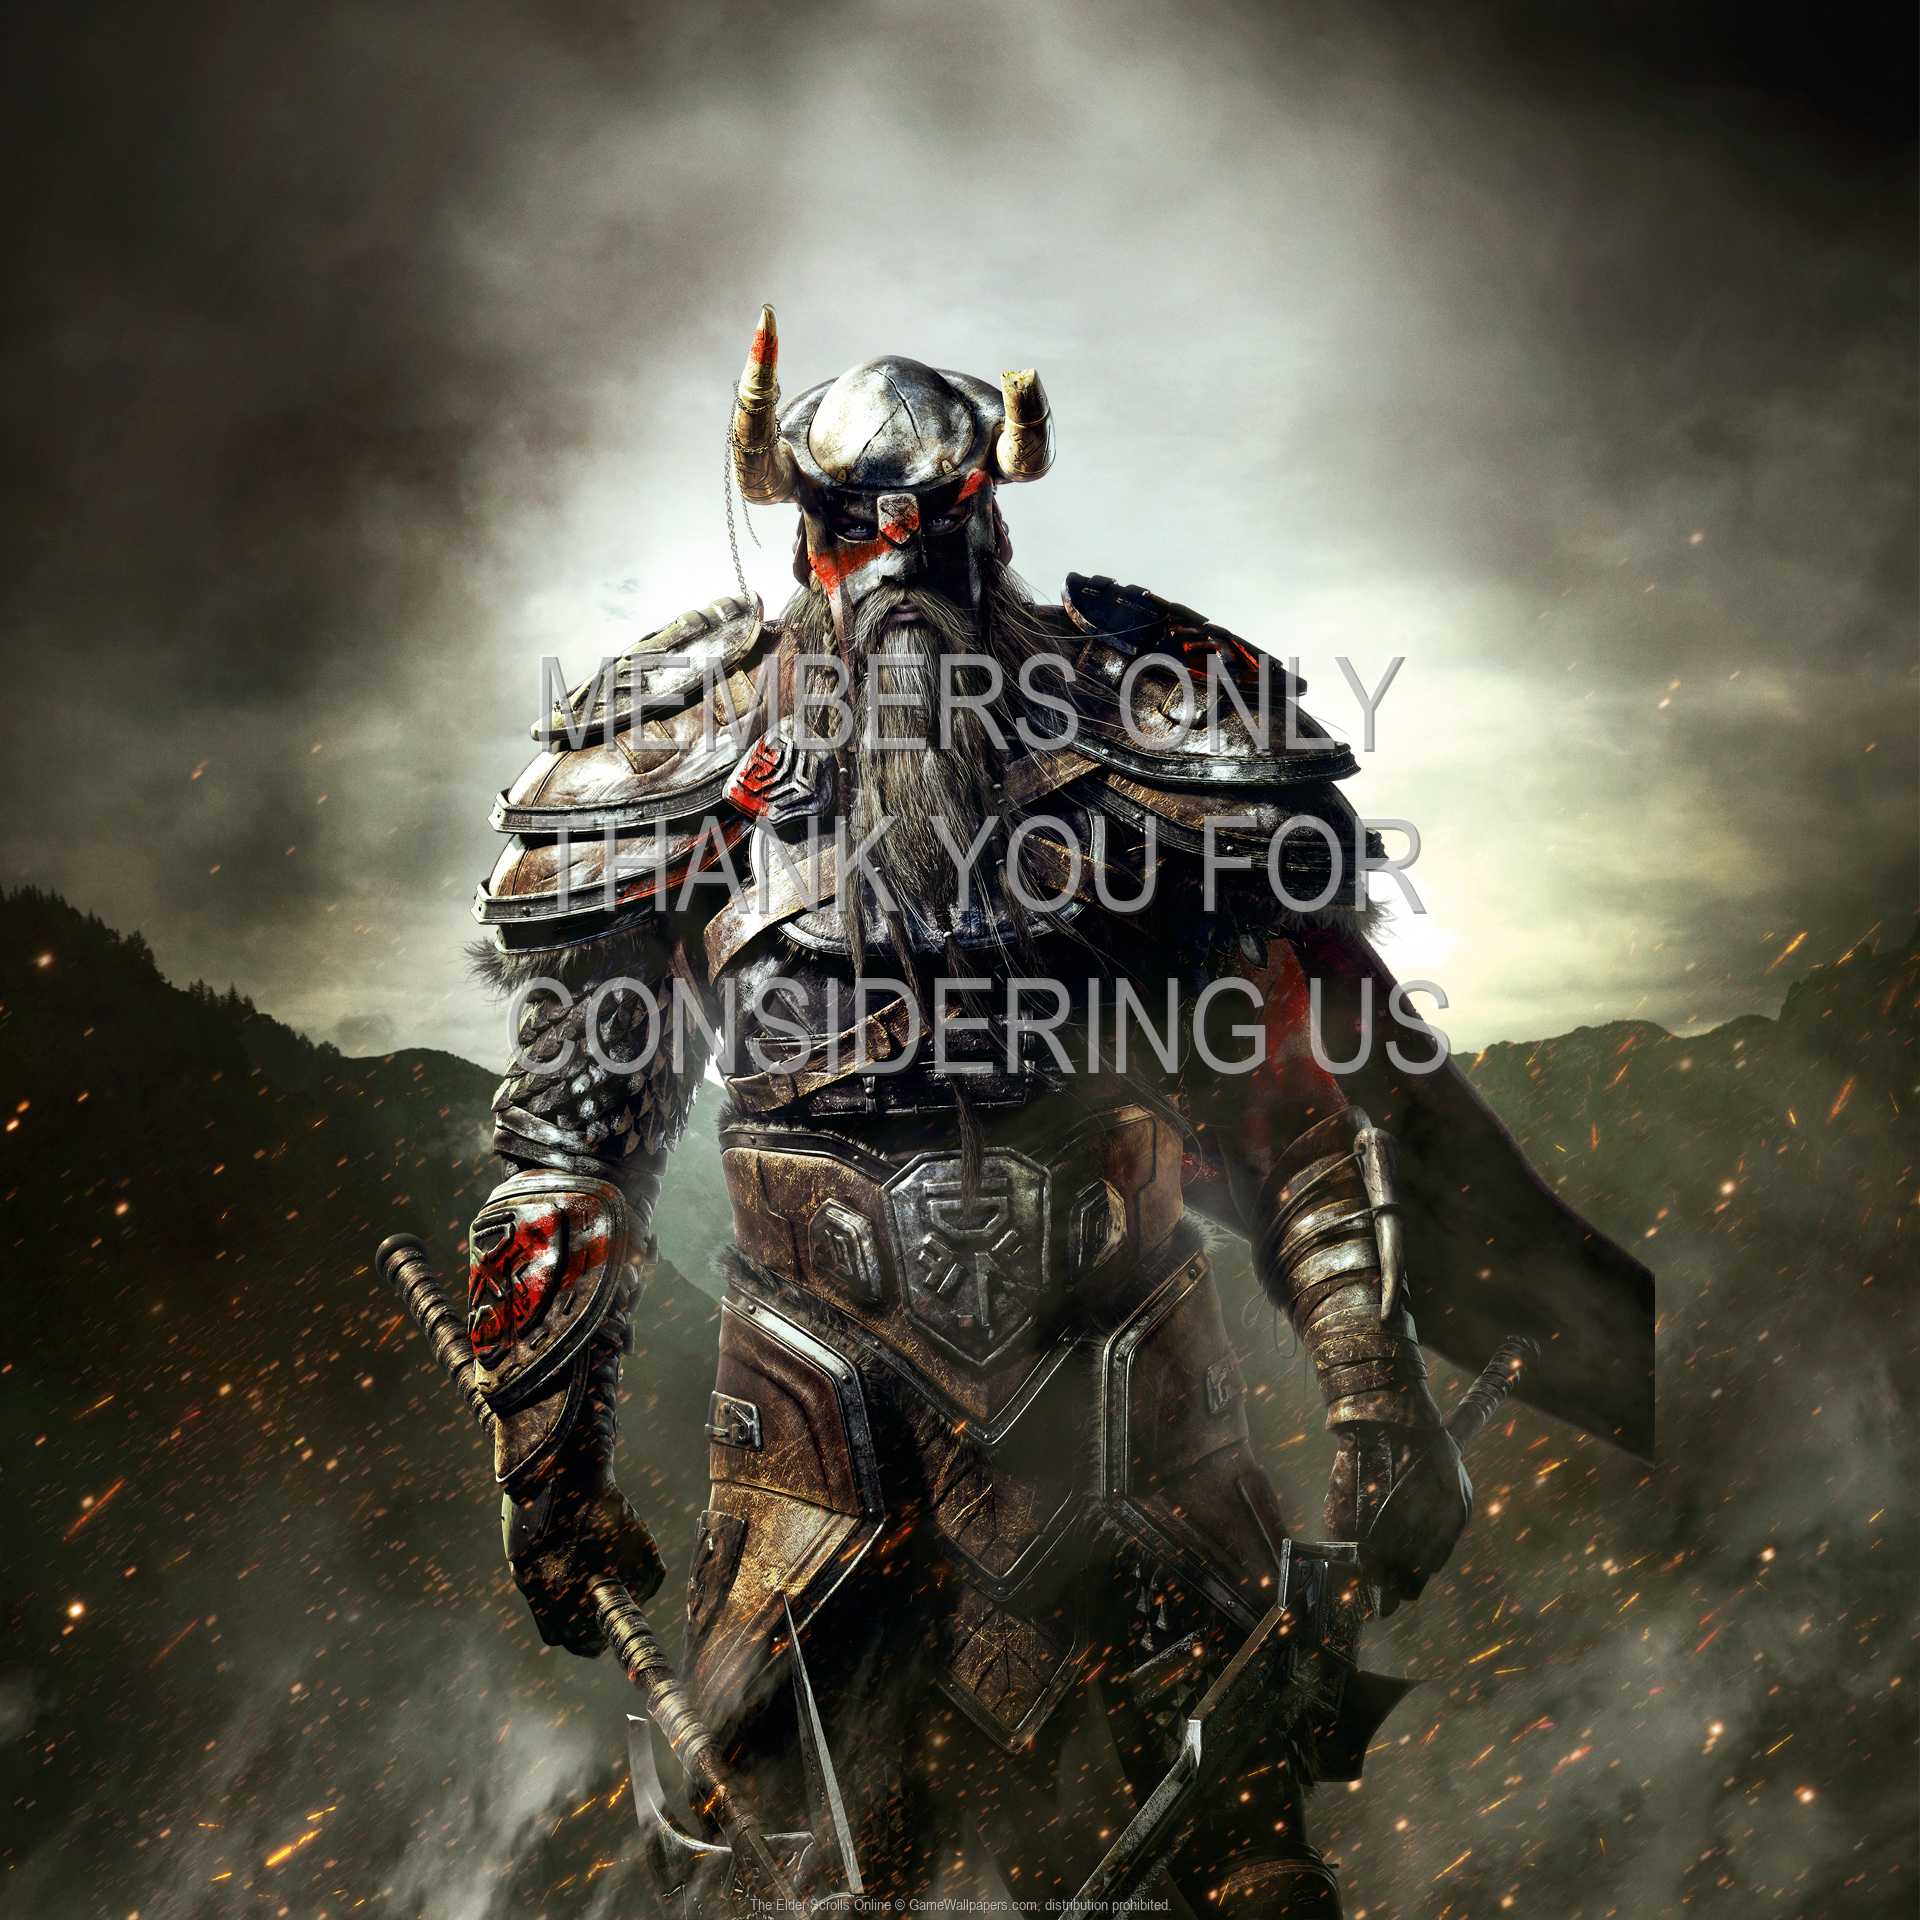 The Elder Scrolls Online 1080p%20Horizontal Mobile wallpaper or background 02